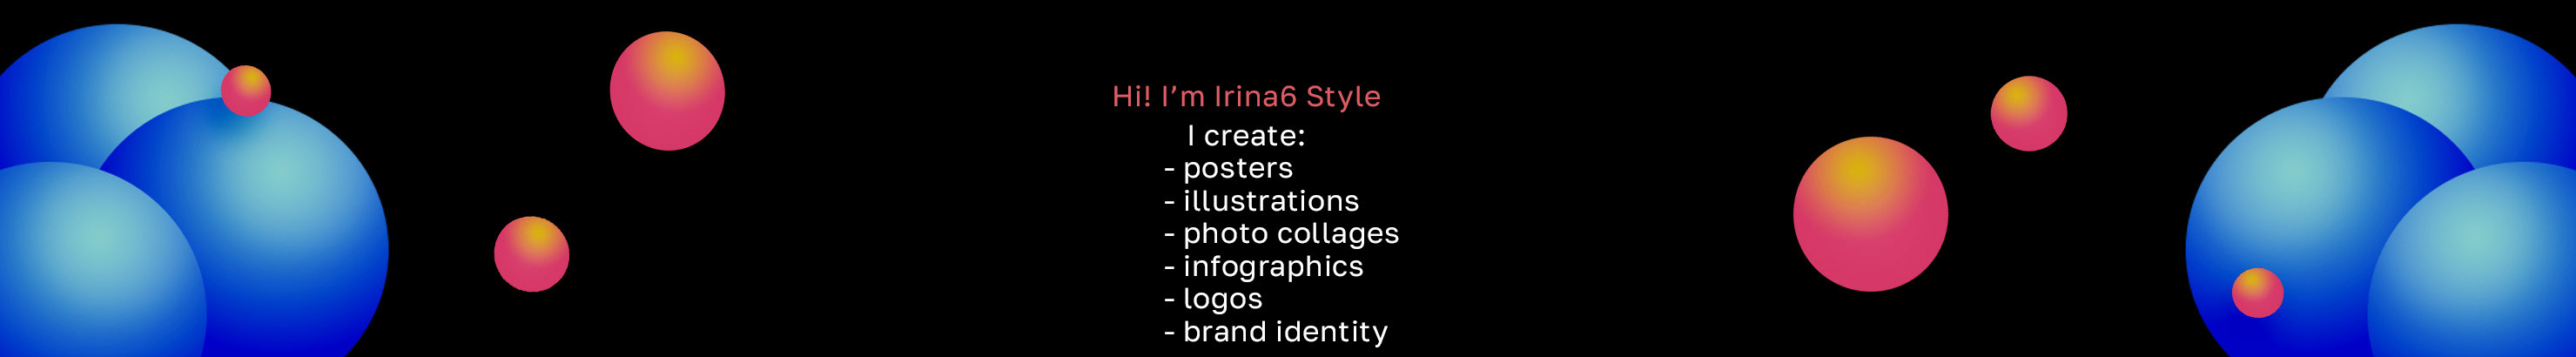 Irina6 Style's profile banner